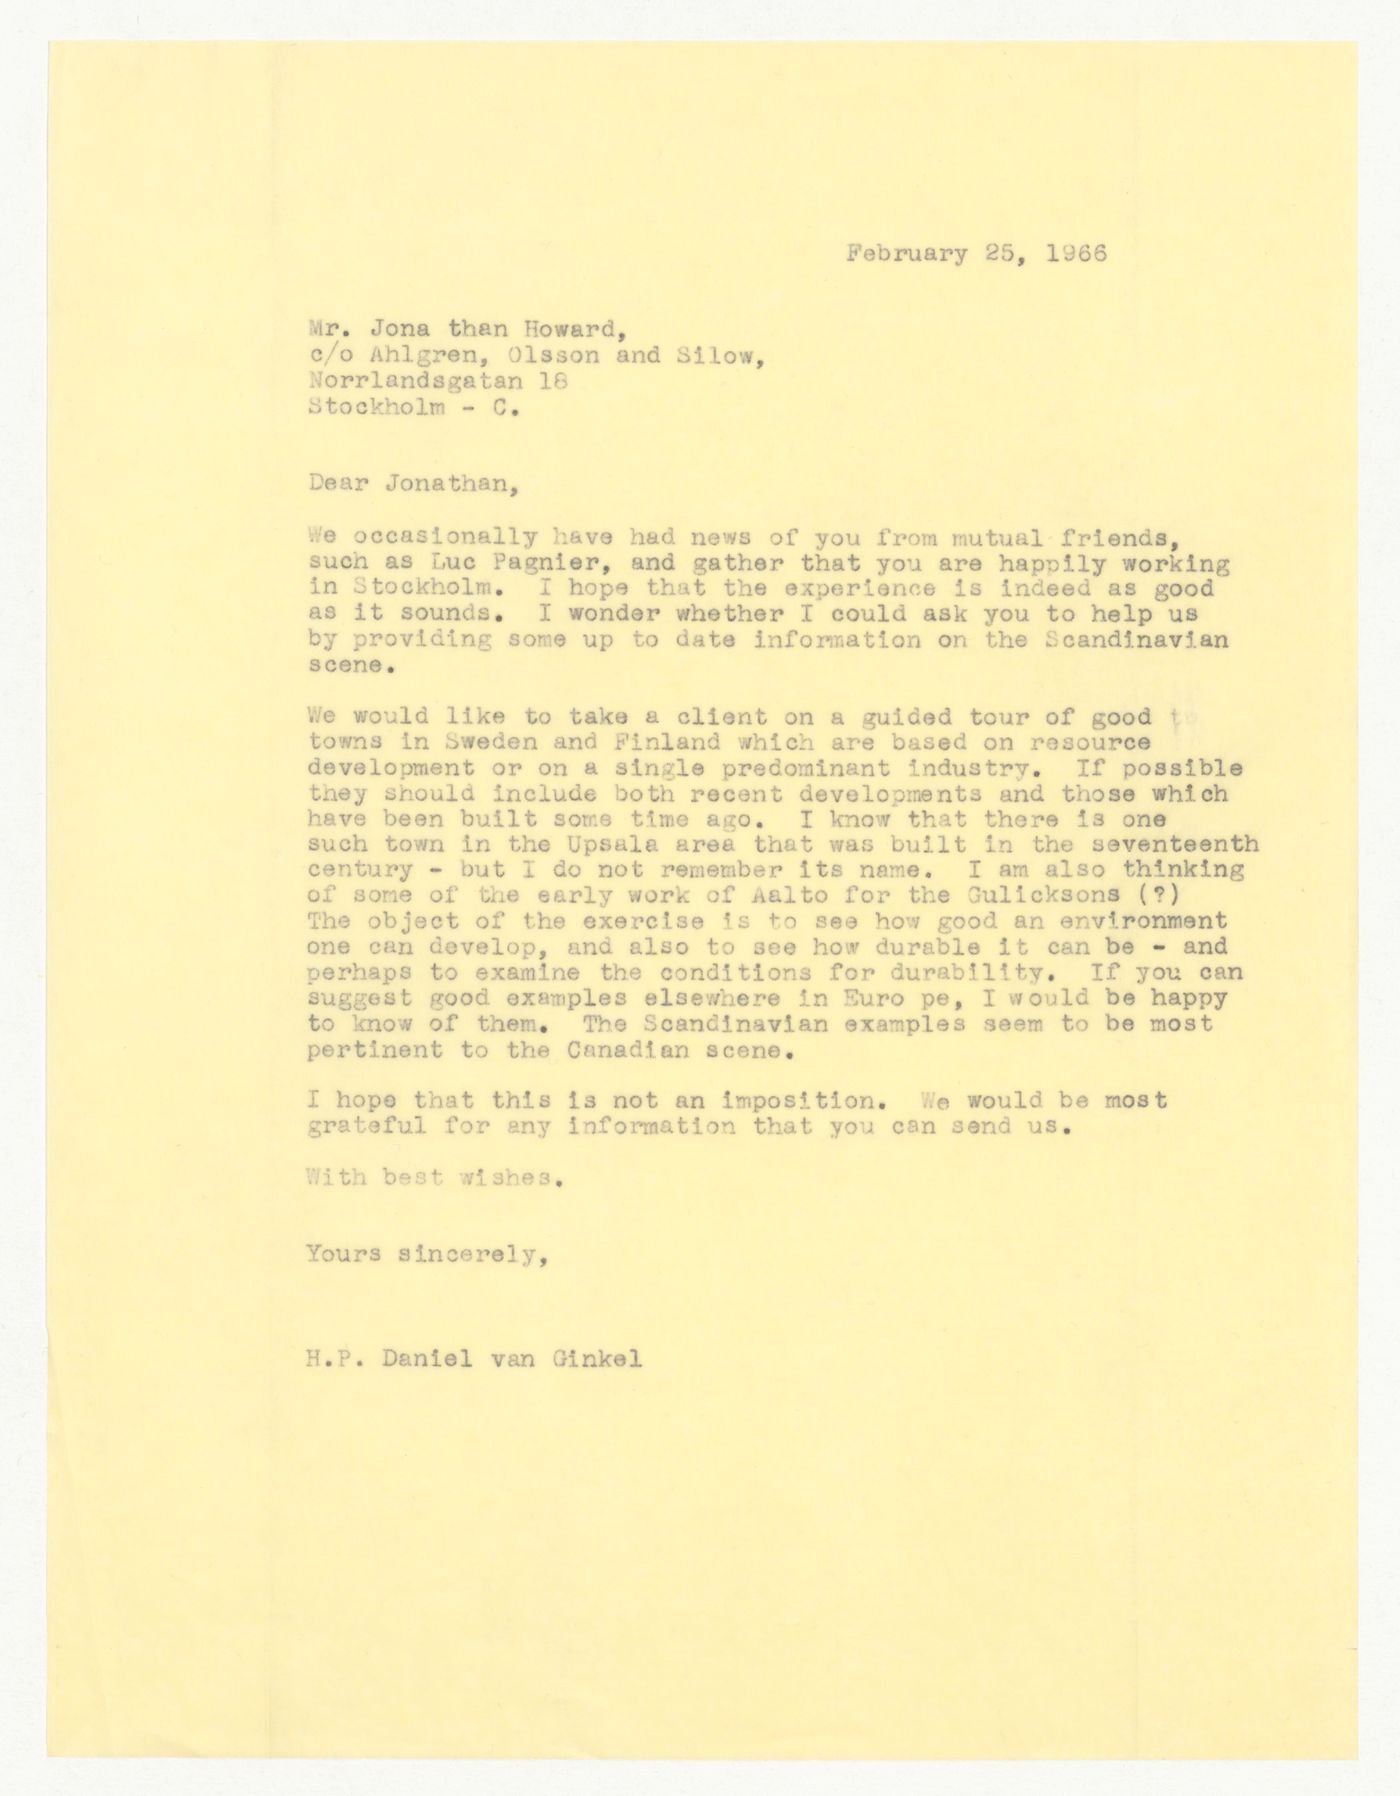 Letter from H. P. Daniel van Ginkel to Jonathan Howard about Esterhazy, Saskatchewan